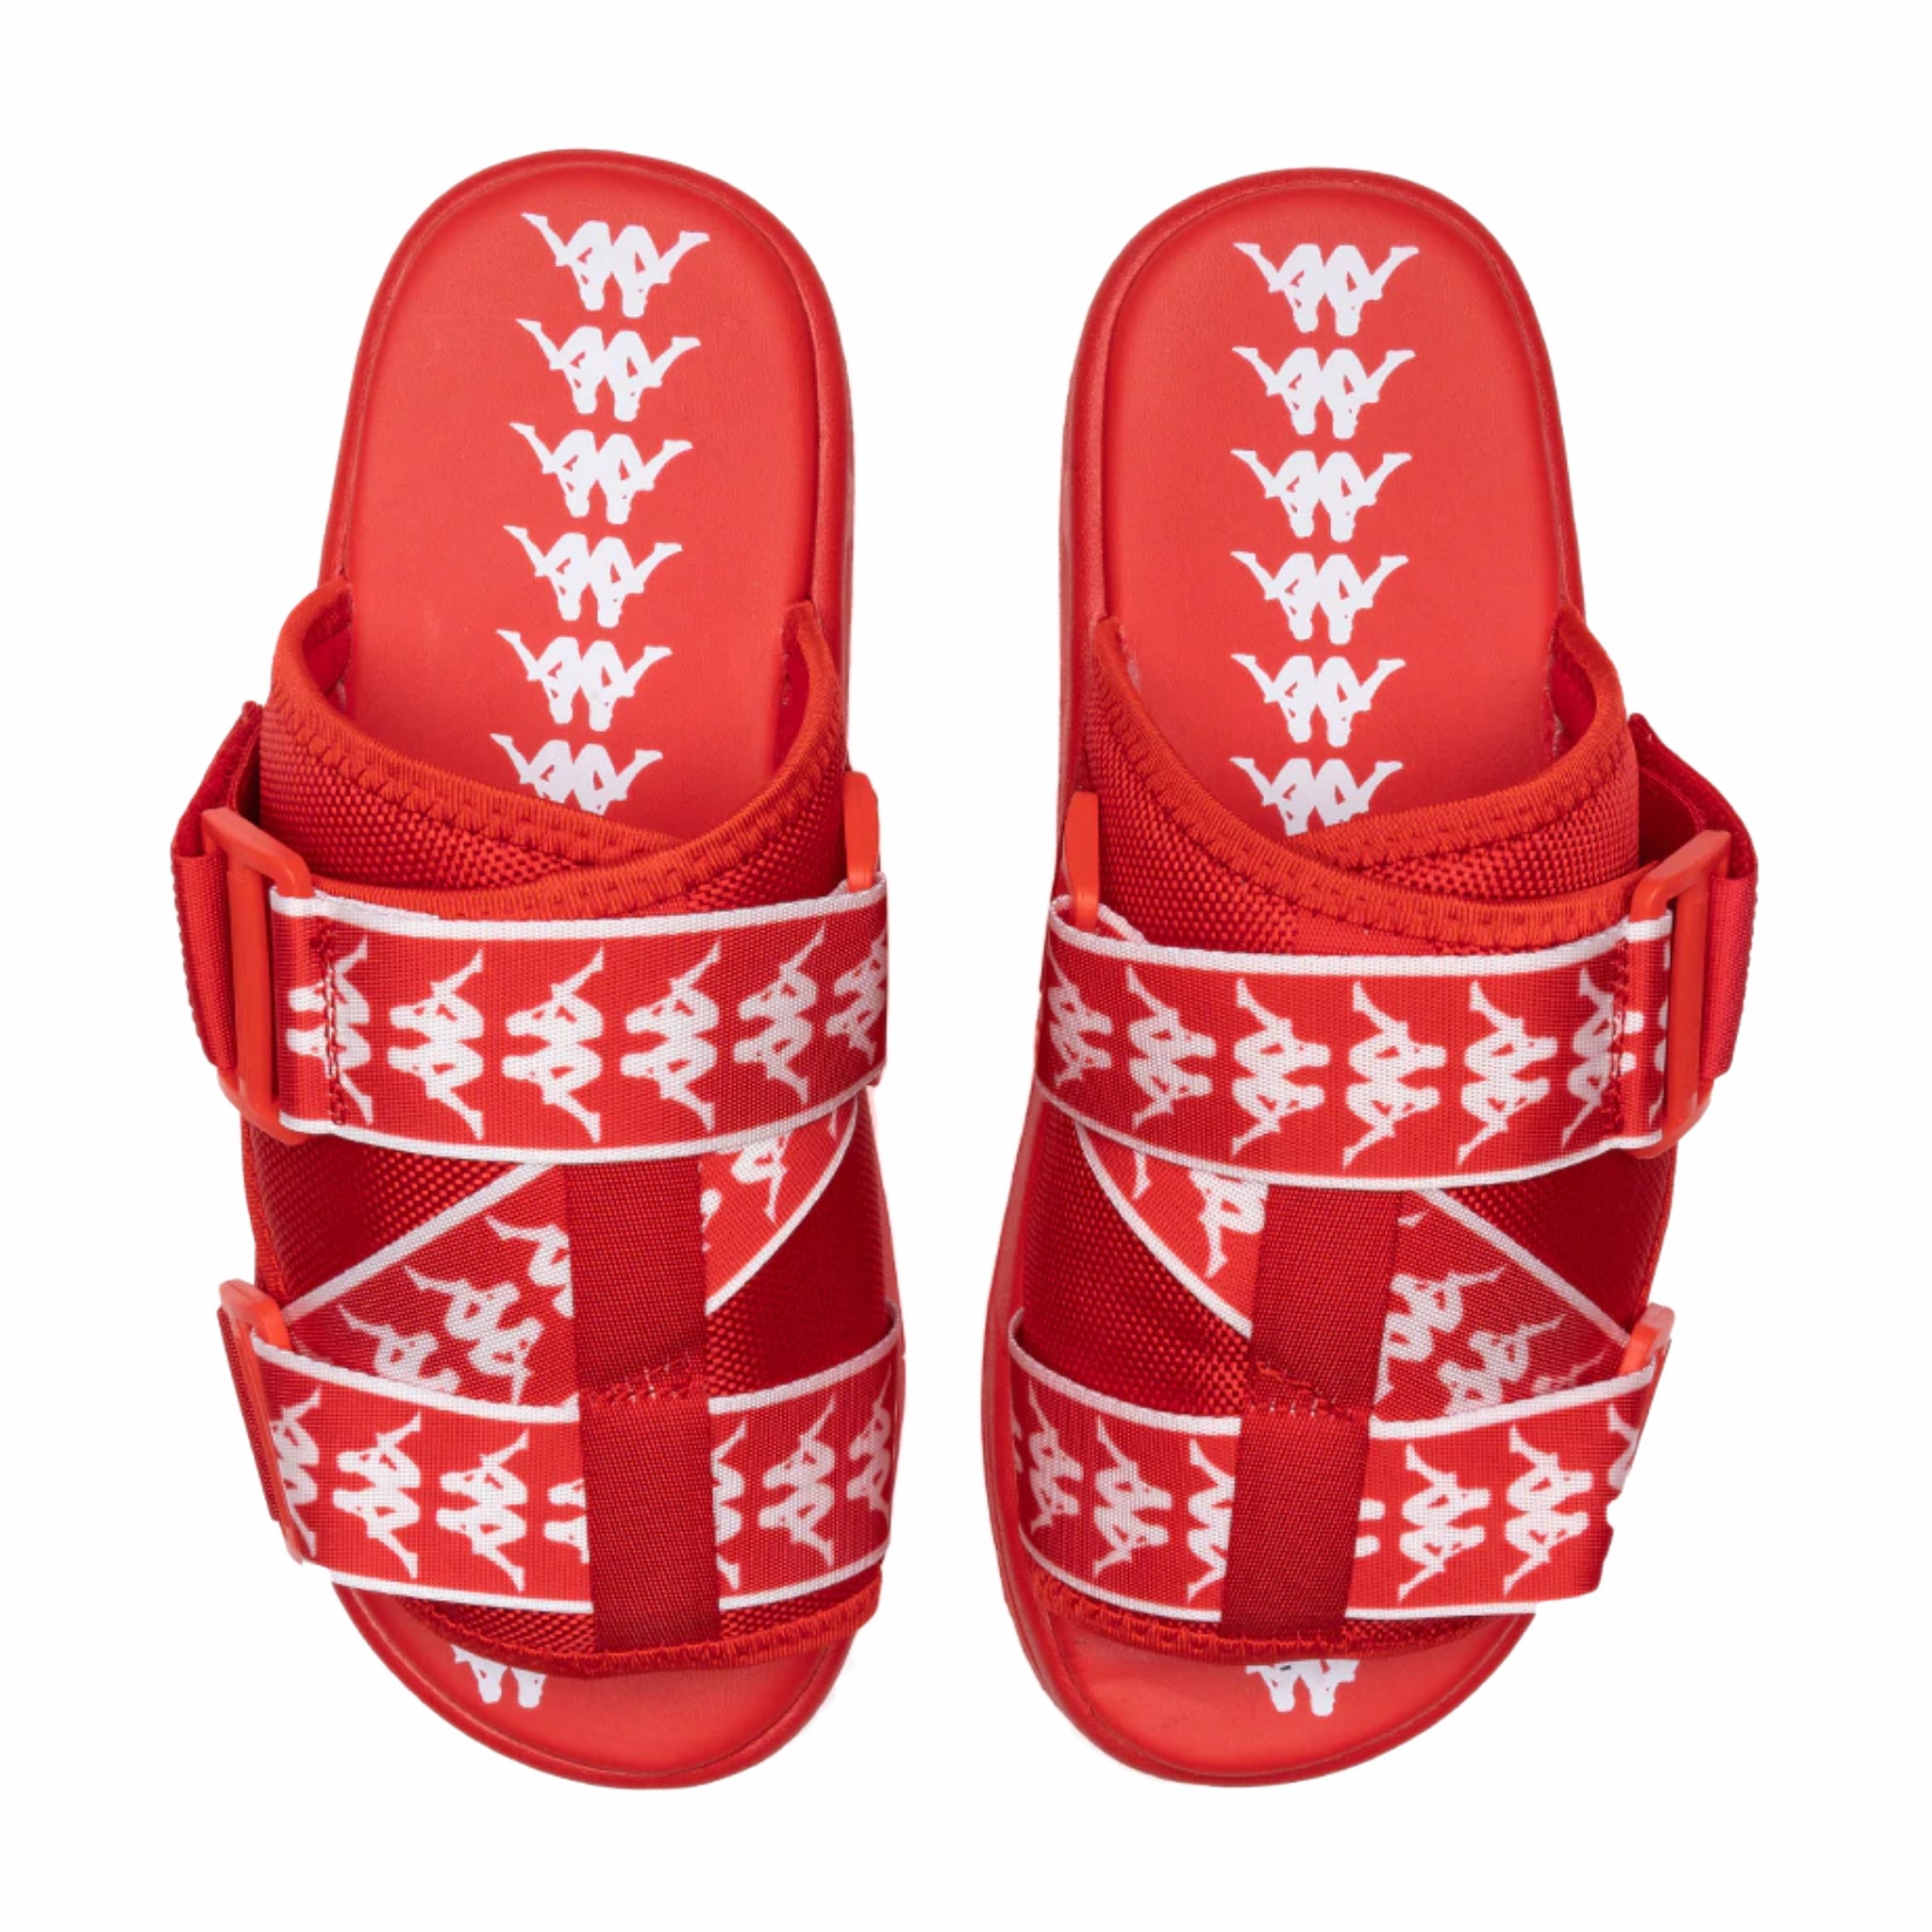 August – Kappa 222 Banda Mitel 1 Sandal (Flame Red-White-Red)